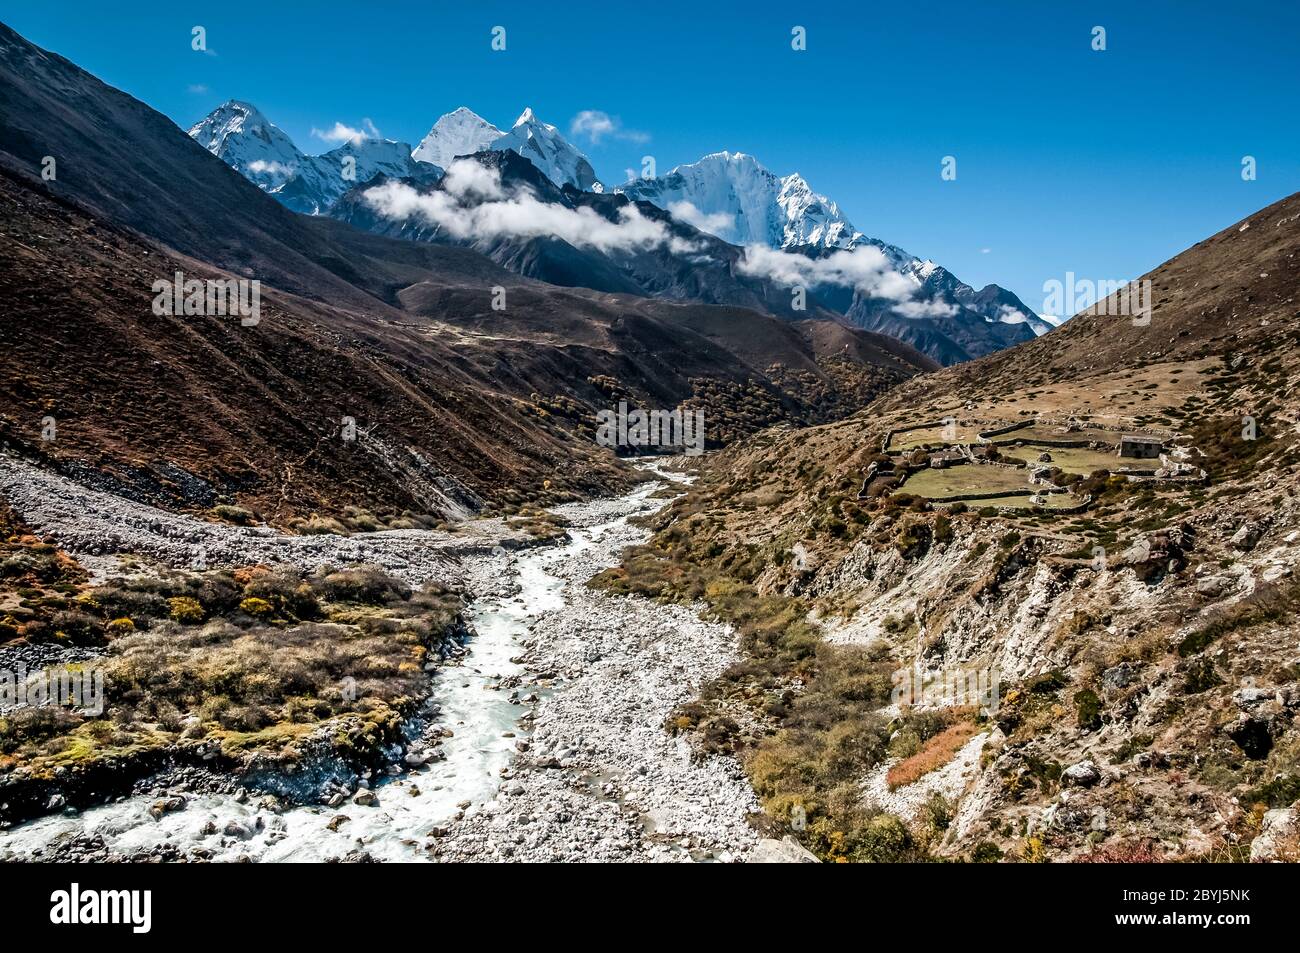 Nepal. Island Peak Trek. Looking down the Dudh Kosi River towards the peaks of Ama Dablam  from above Dingboche Village Stock Photo